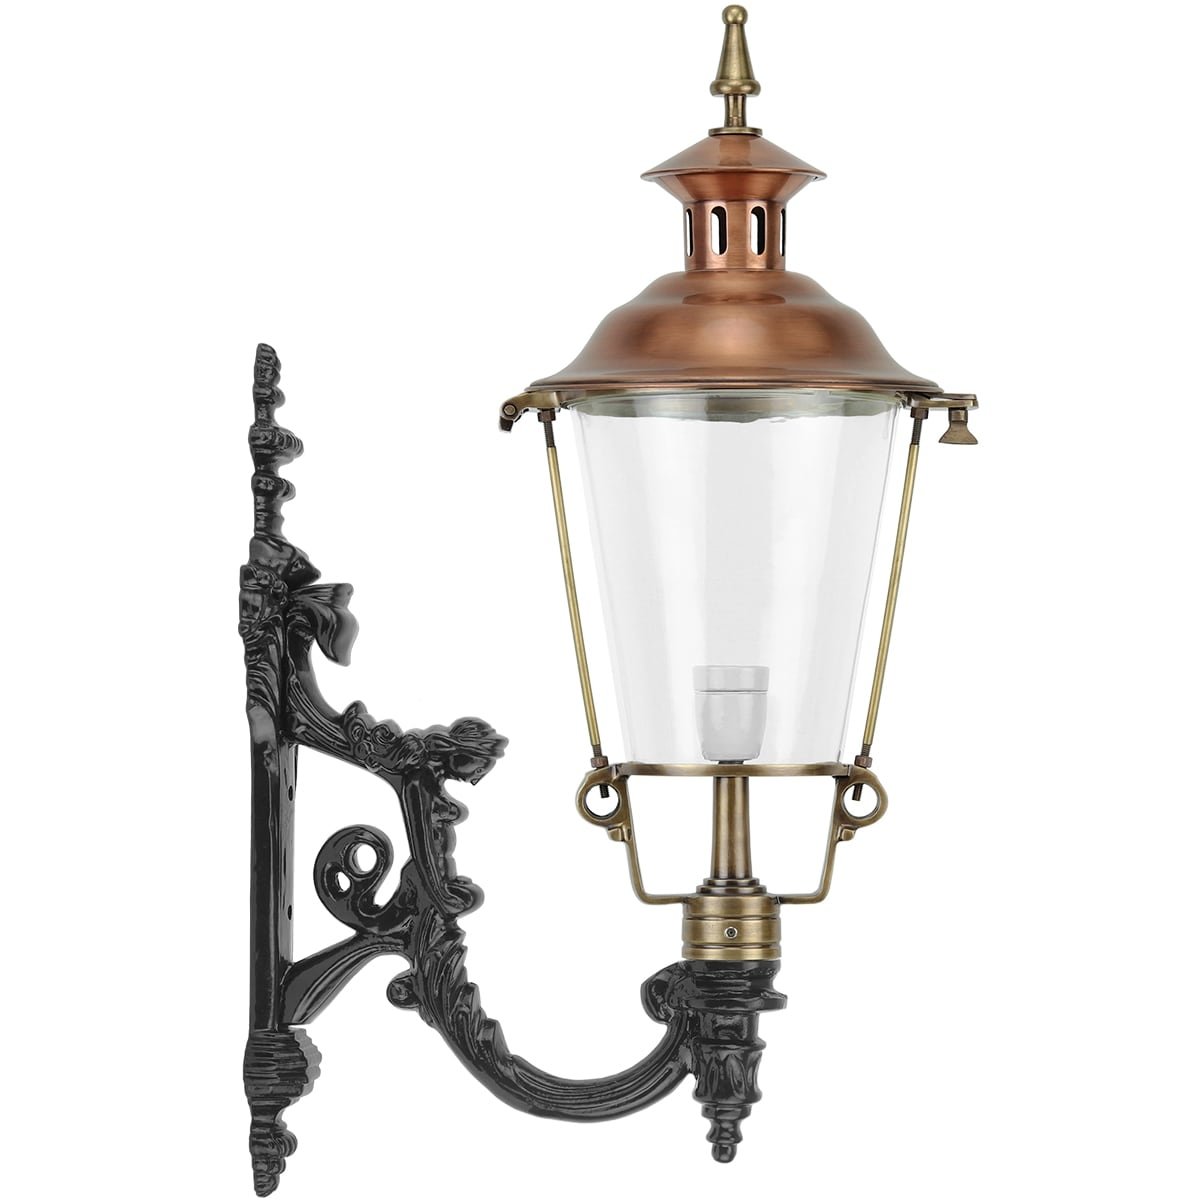 Wall lantern Beutenaken bronze - 83 cm